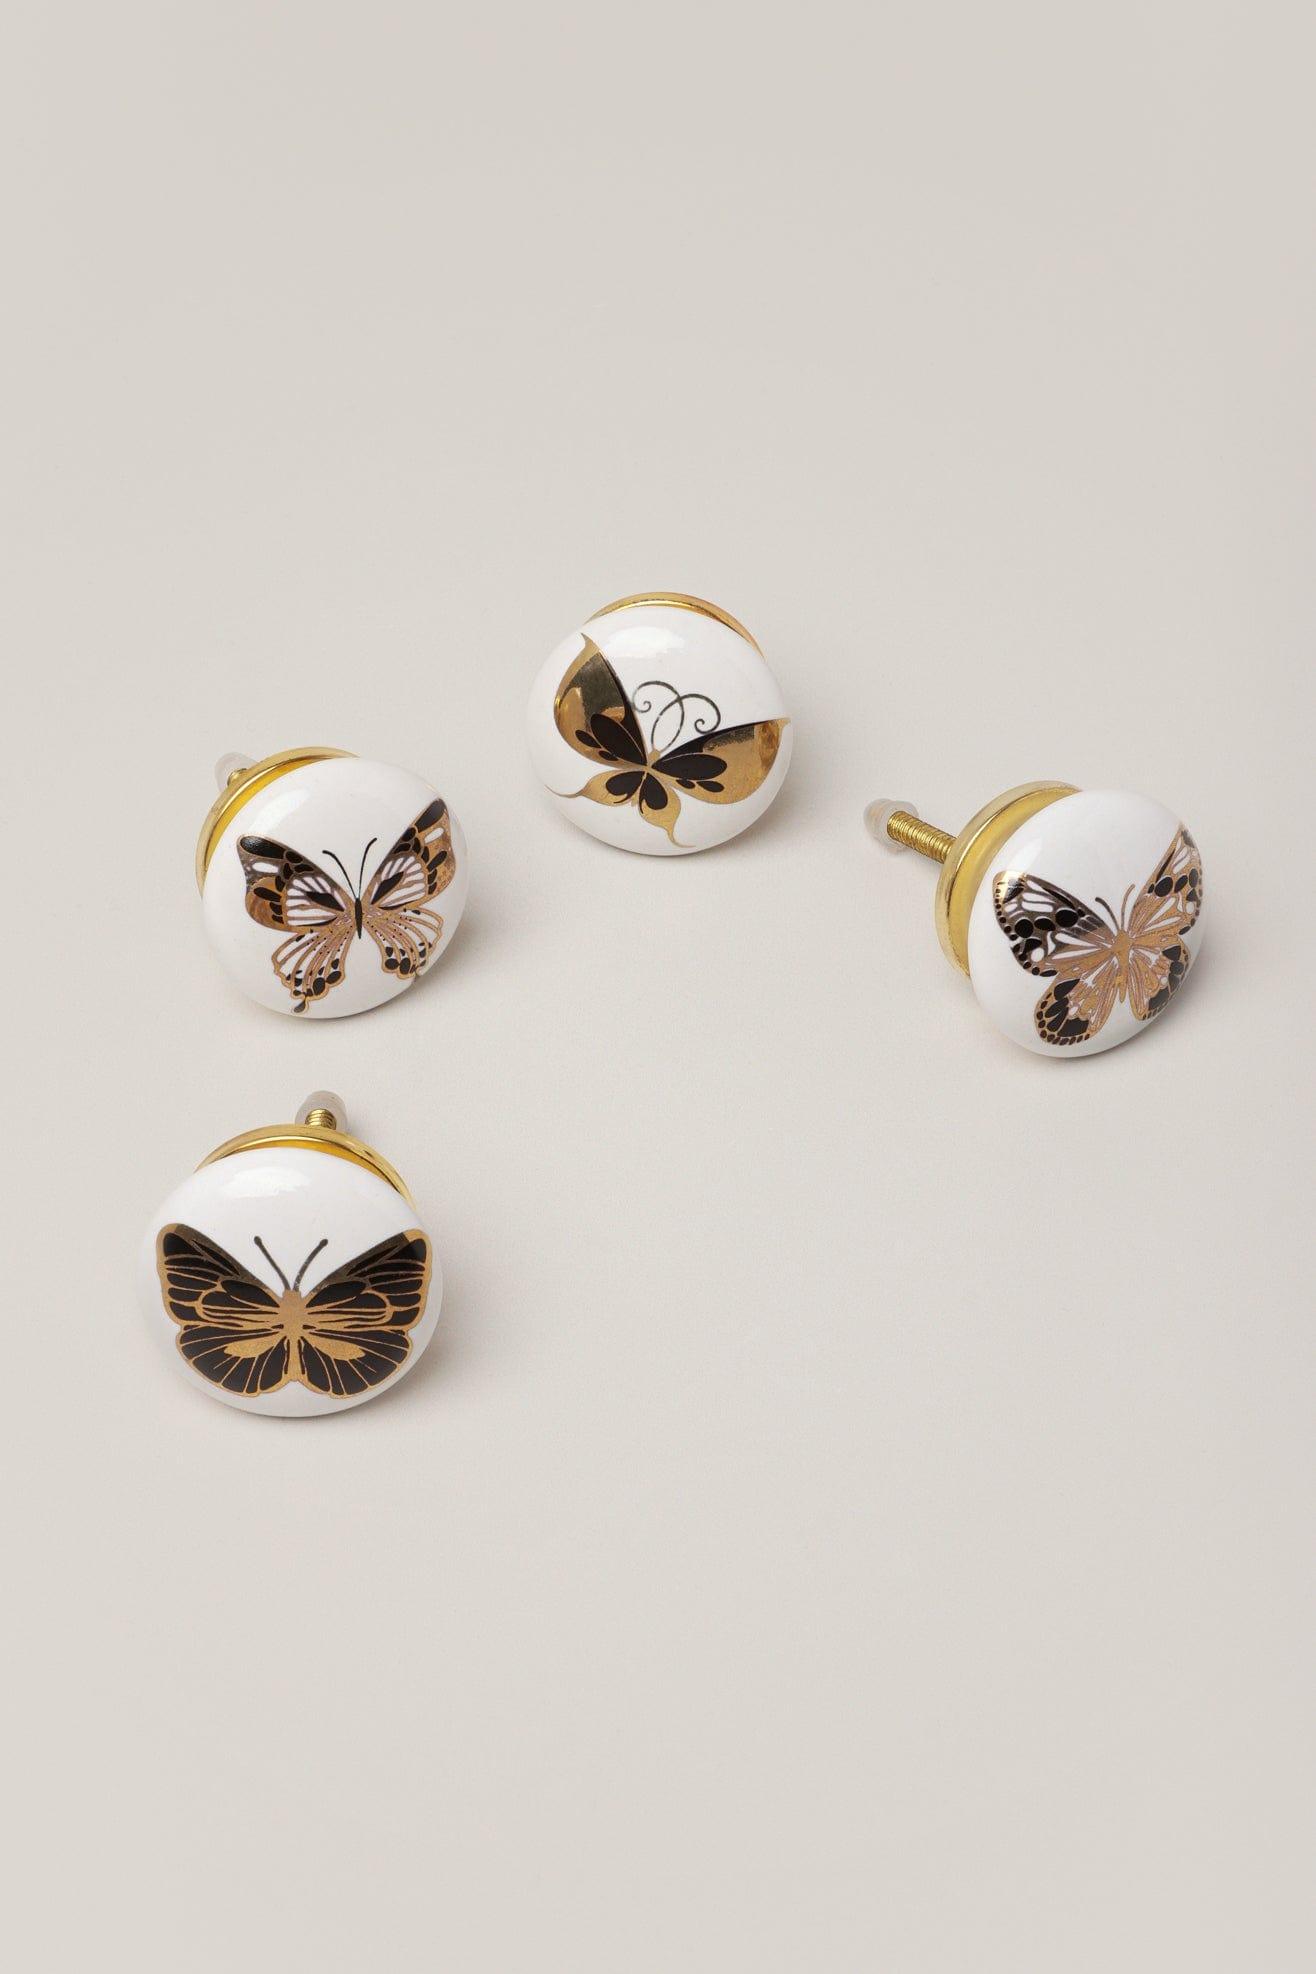 G Decor Cabinet Knobs & Handles Butterfly Design Handmade Ceramic Brass Door Pull Knobs